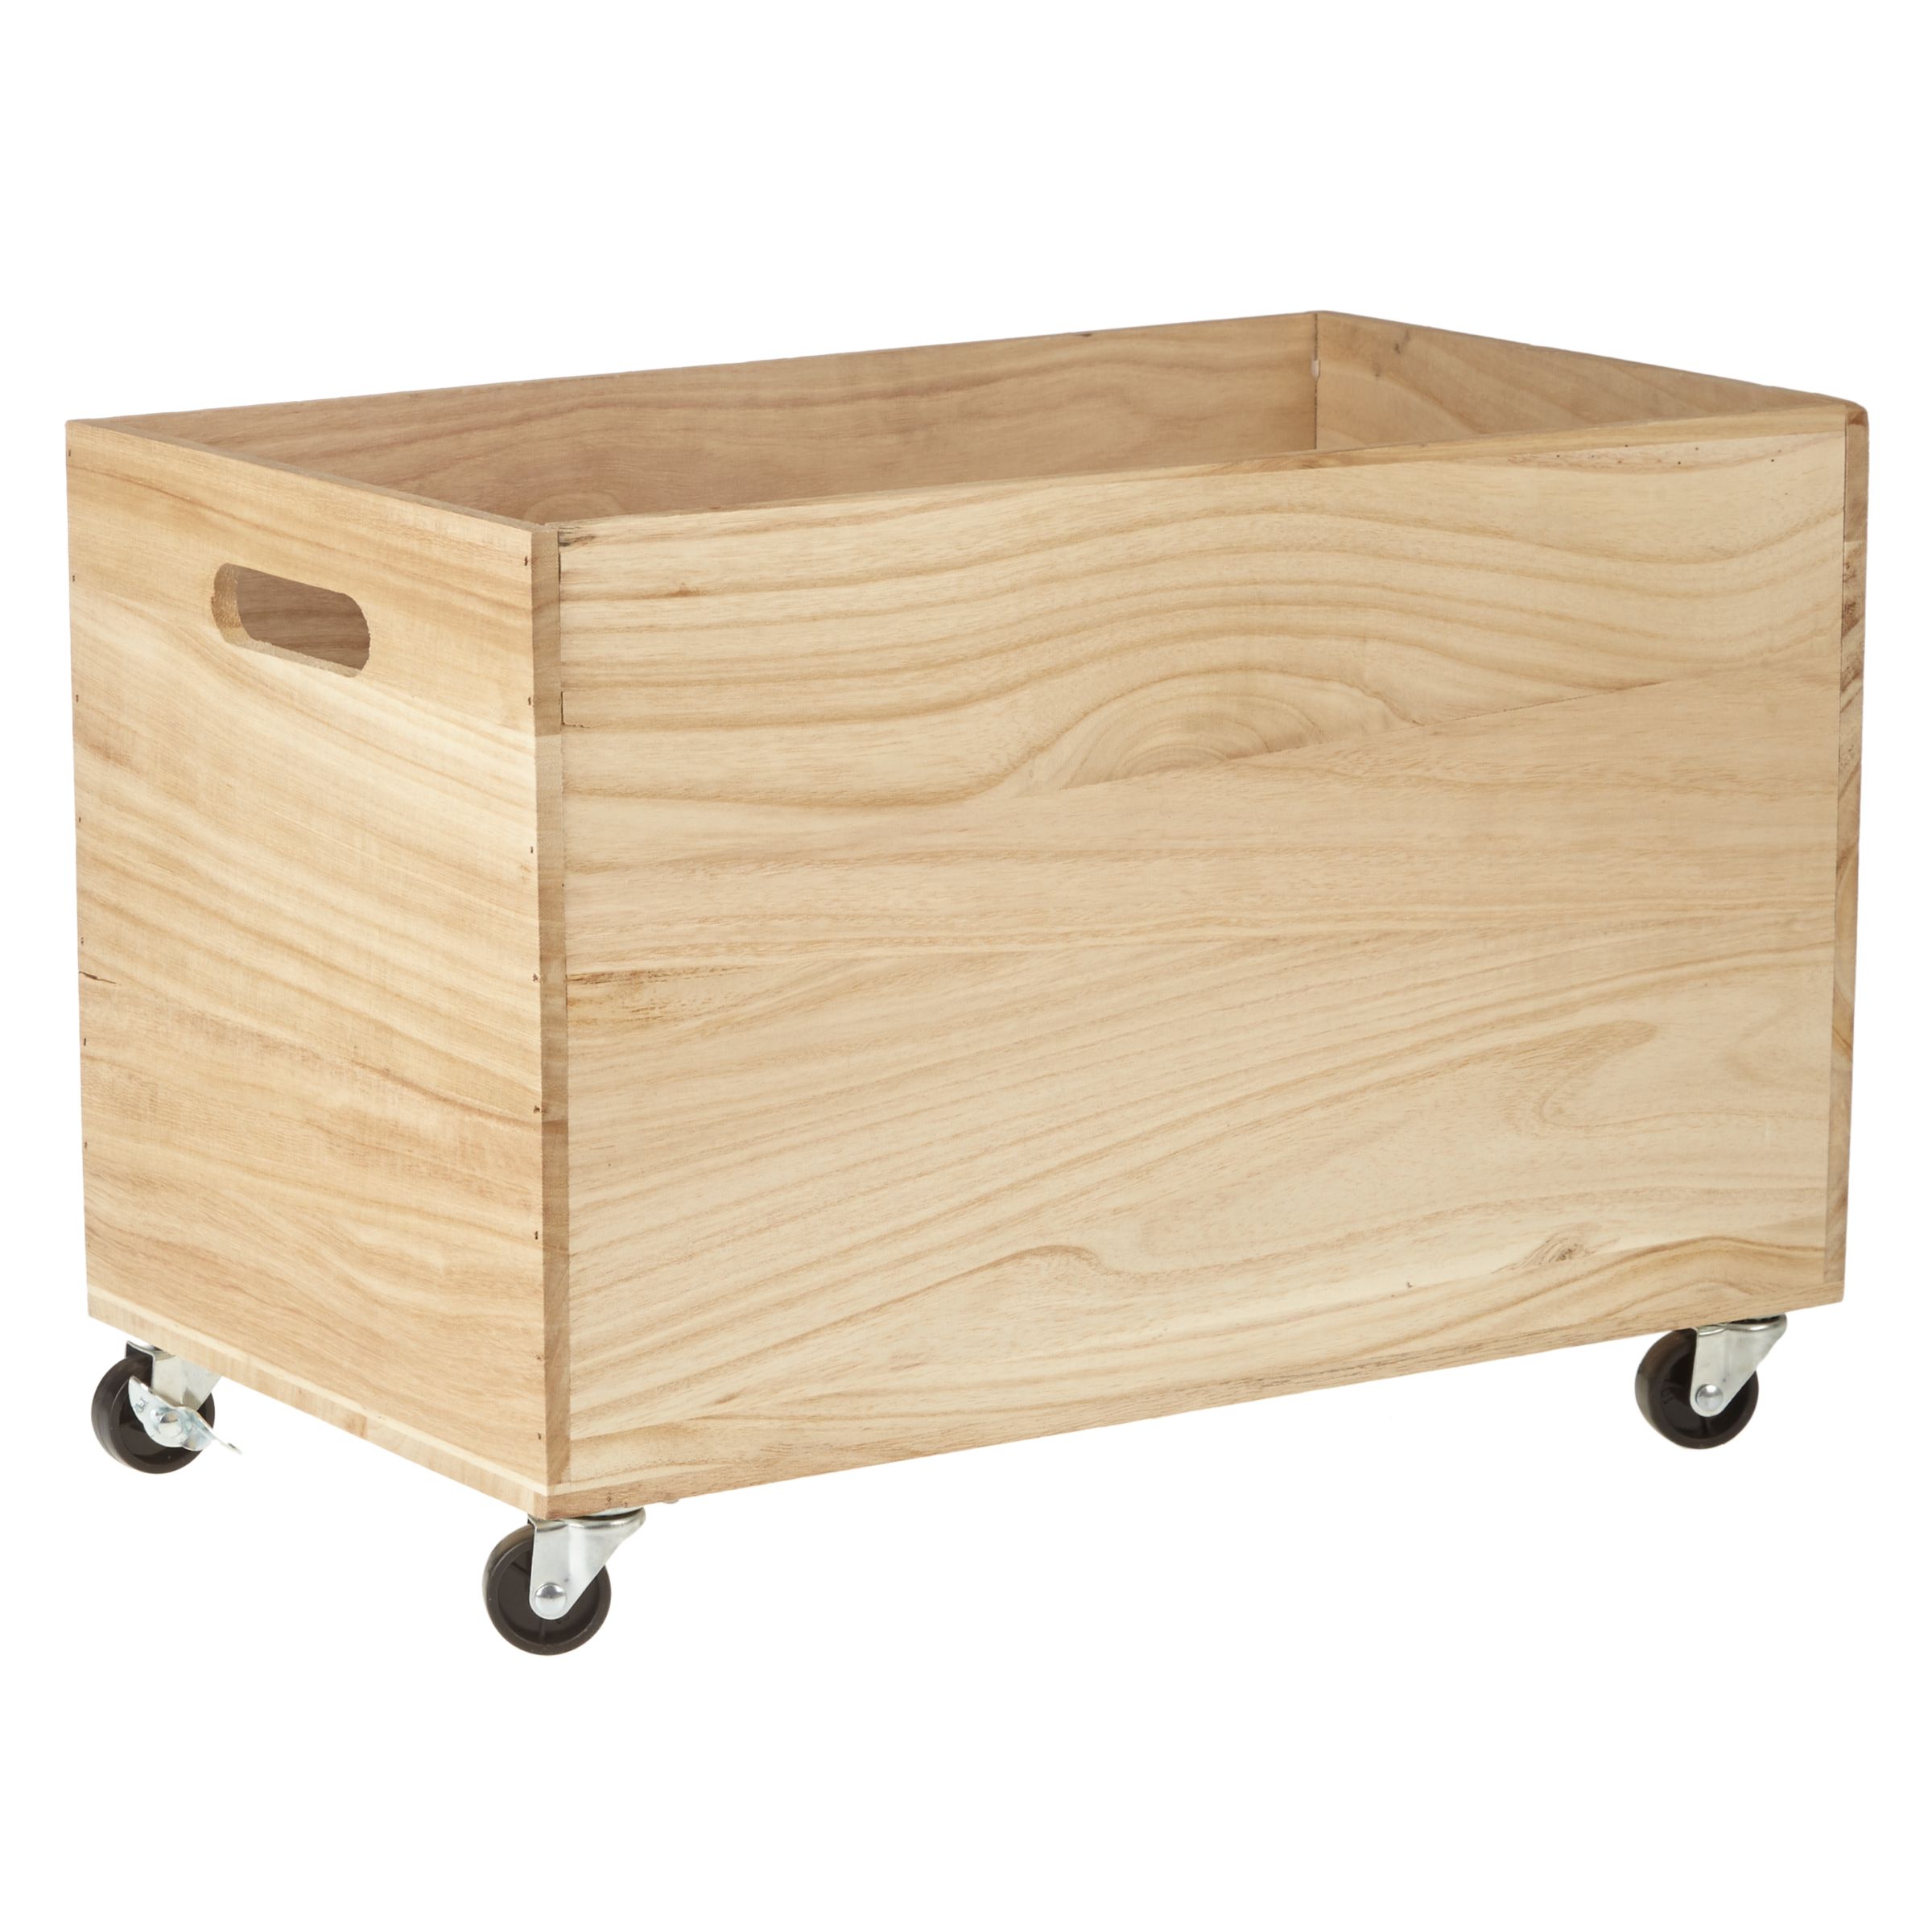 John Lewis Wood Storage Box On Castors, Wooden Storage Crates On Wheels